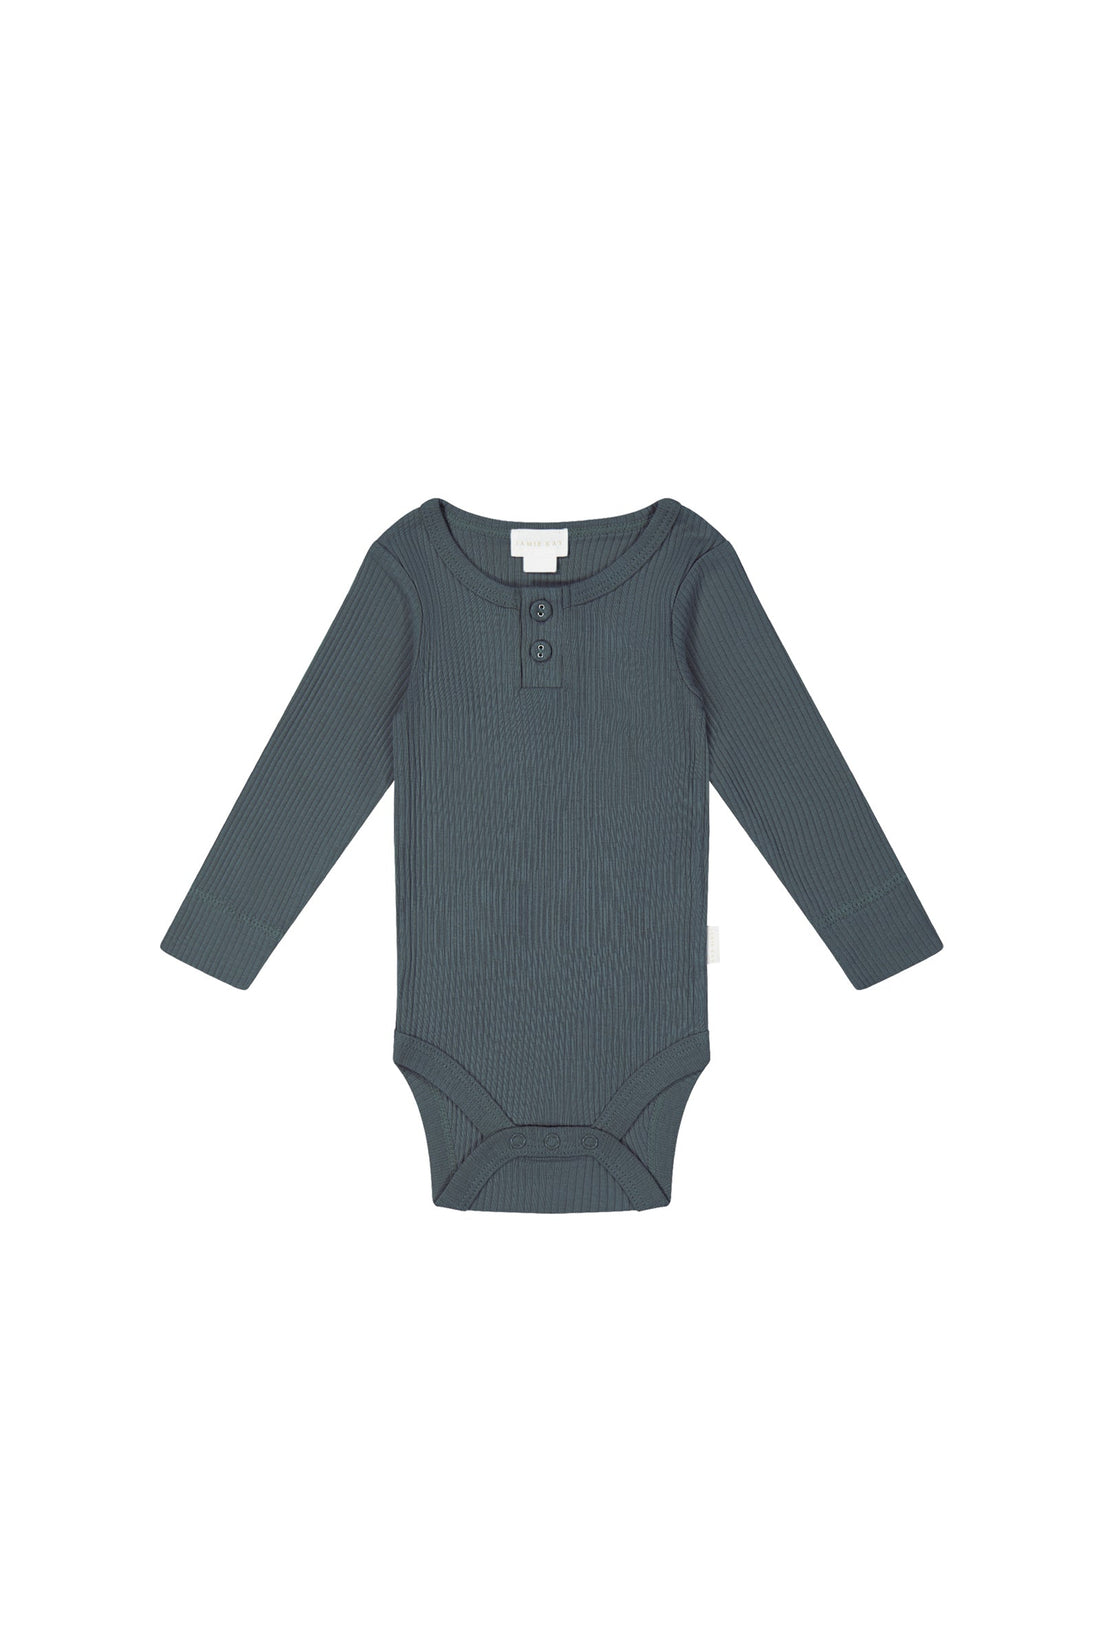 Organic Cotton Modal Elastane Long Sleeve Bodysuit - Smoke - Cute Baby Bodysuit at Jamie Kay